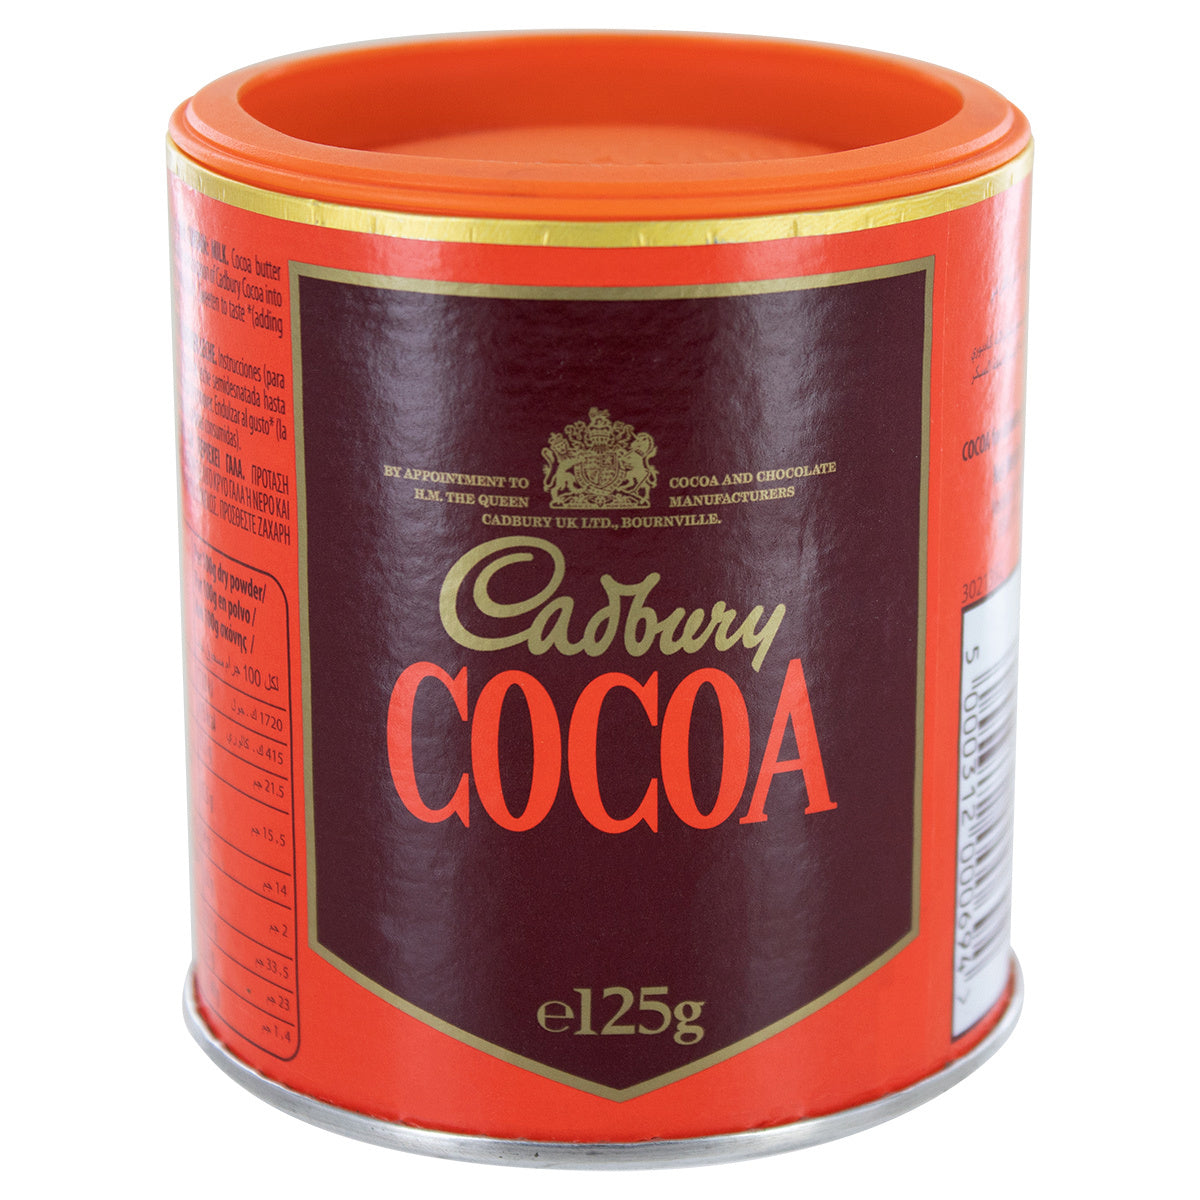 Cadbury - Cocoa - 125g - Continental Food Store